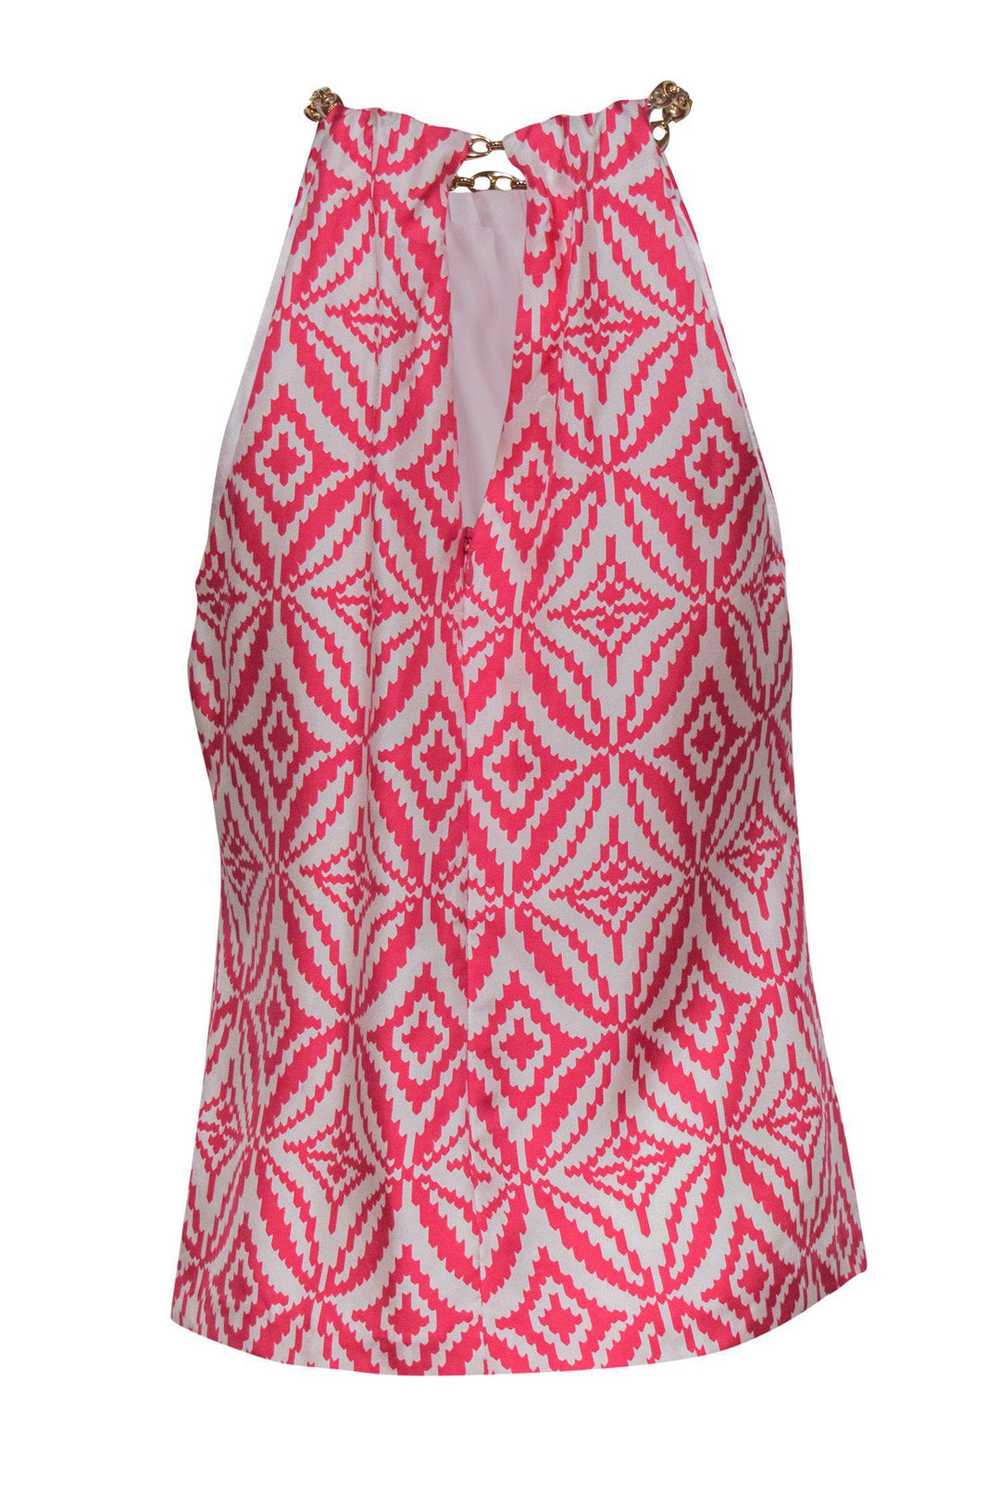 Milly - Pink & White Printed Silk Halter Top w/ C… - image 3